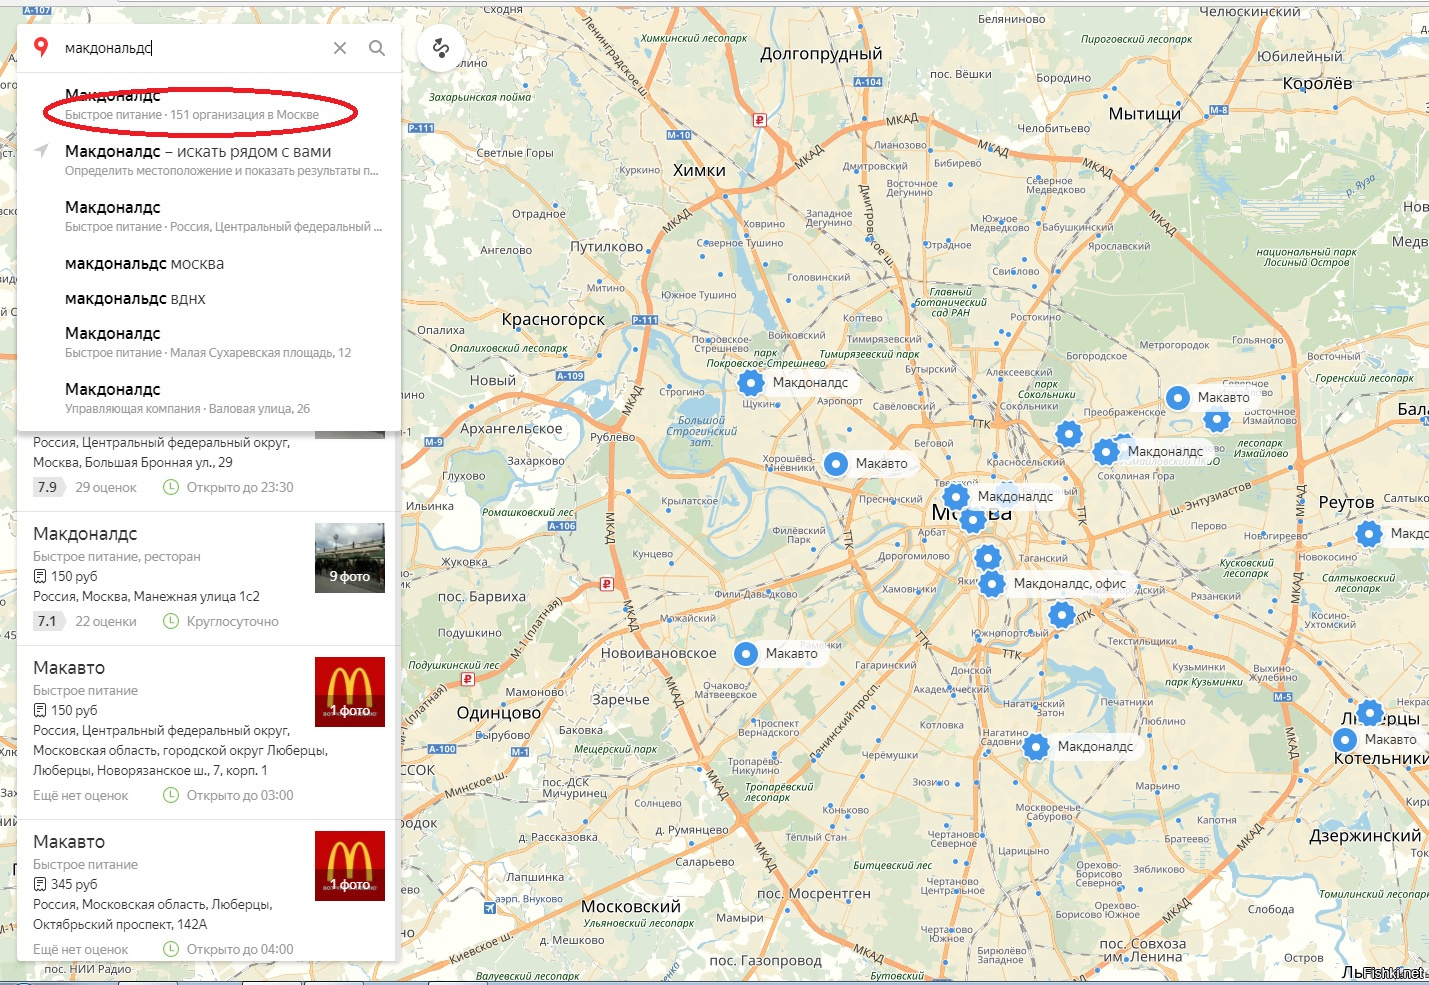  Порядок В Москве Адреса На Карте — Tutshoping